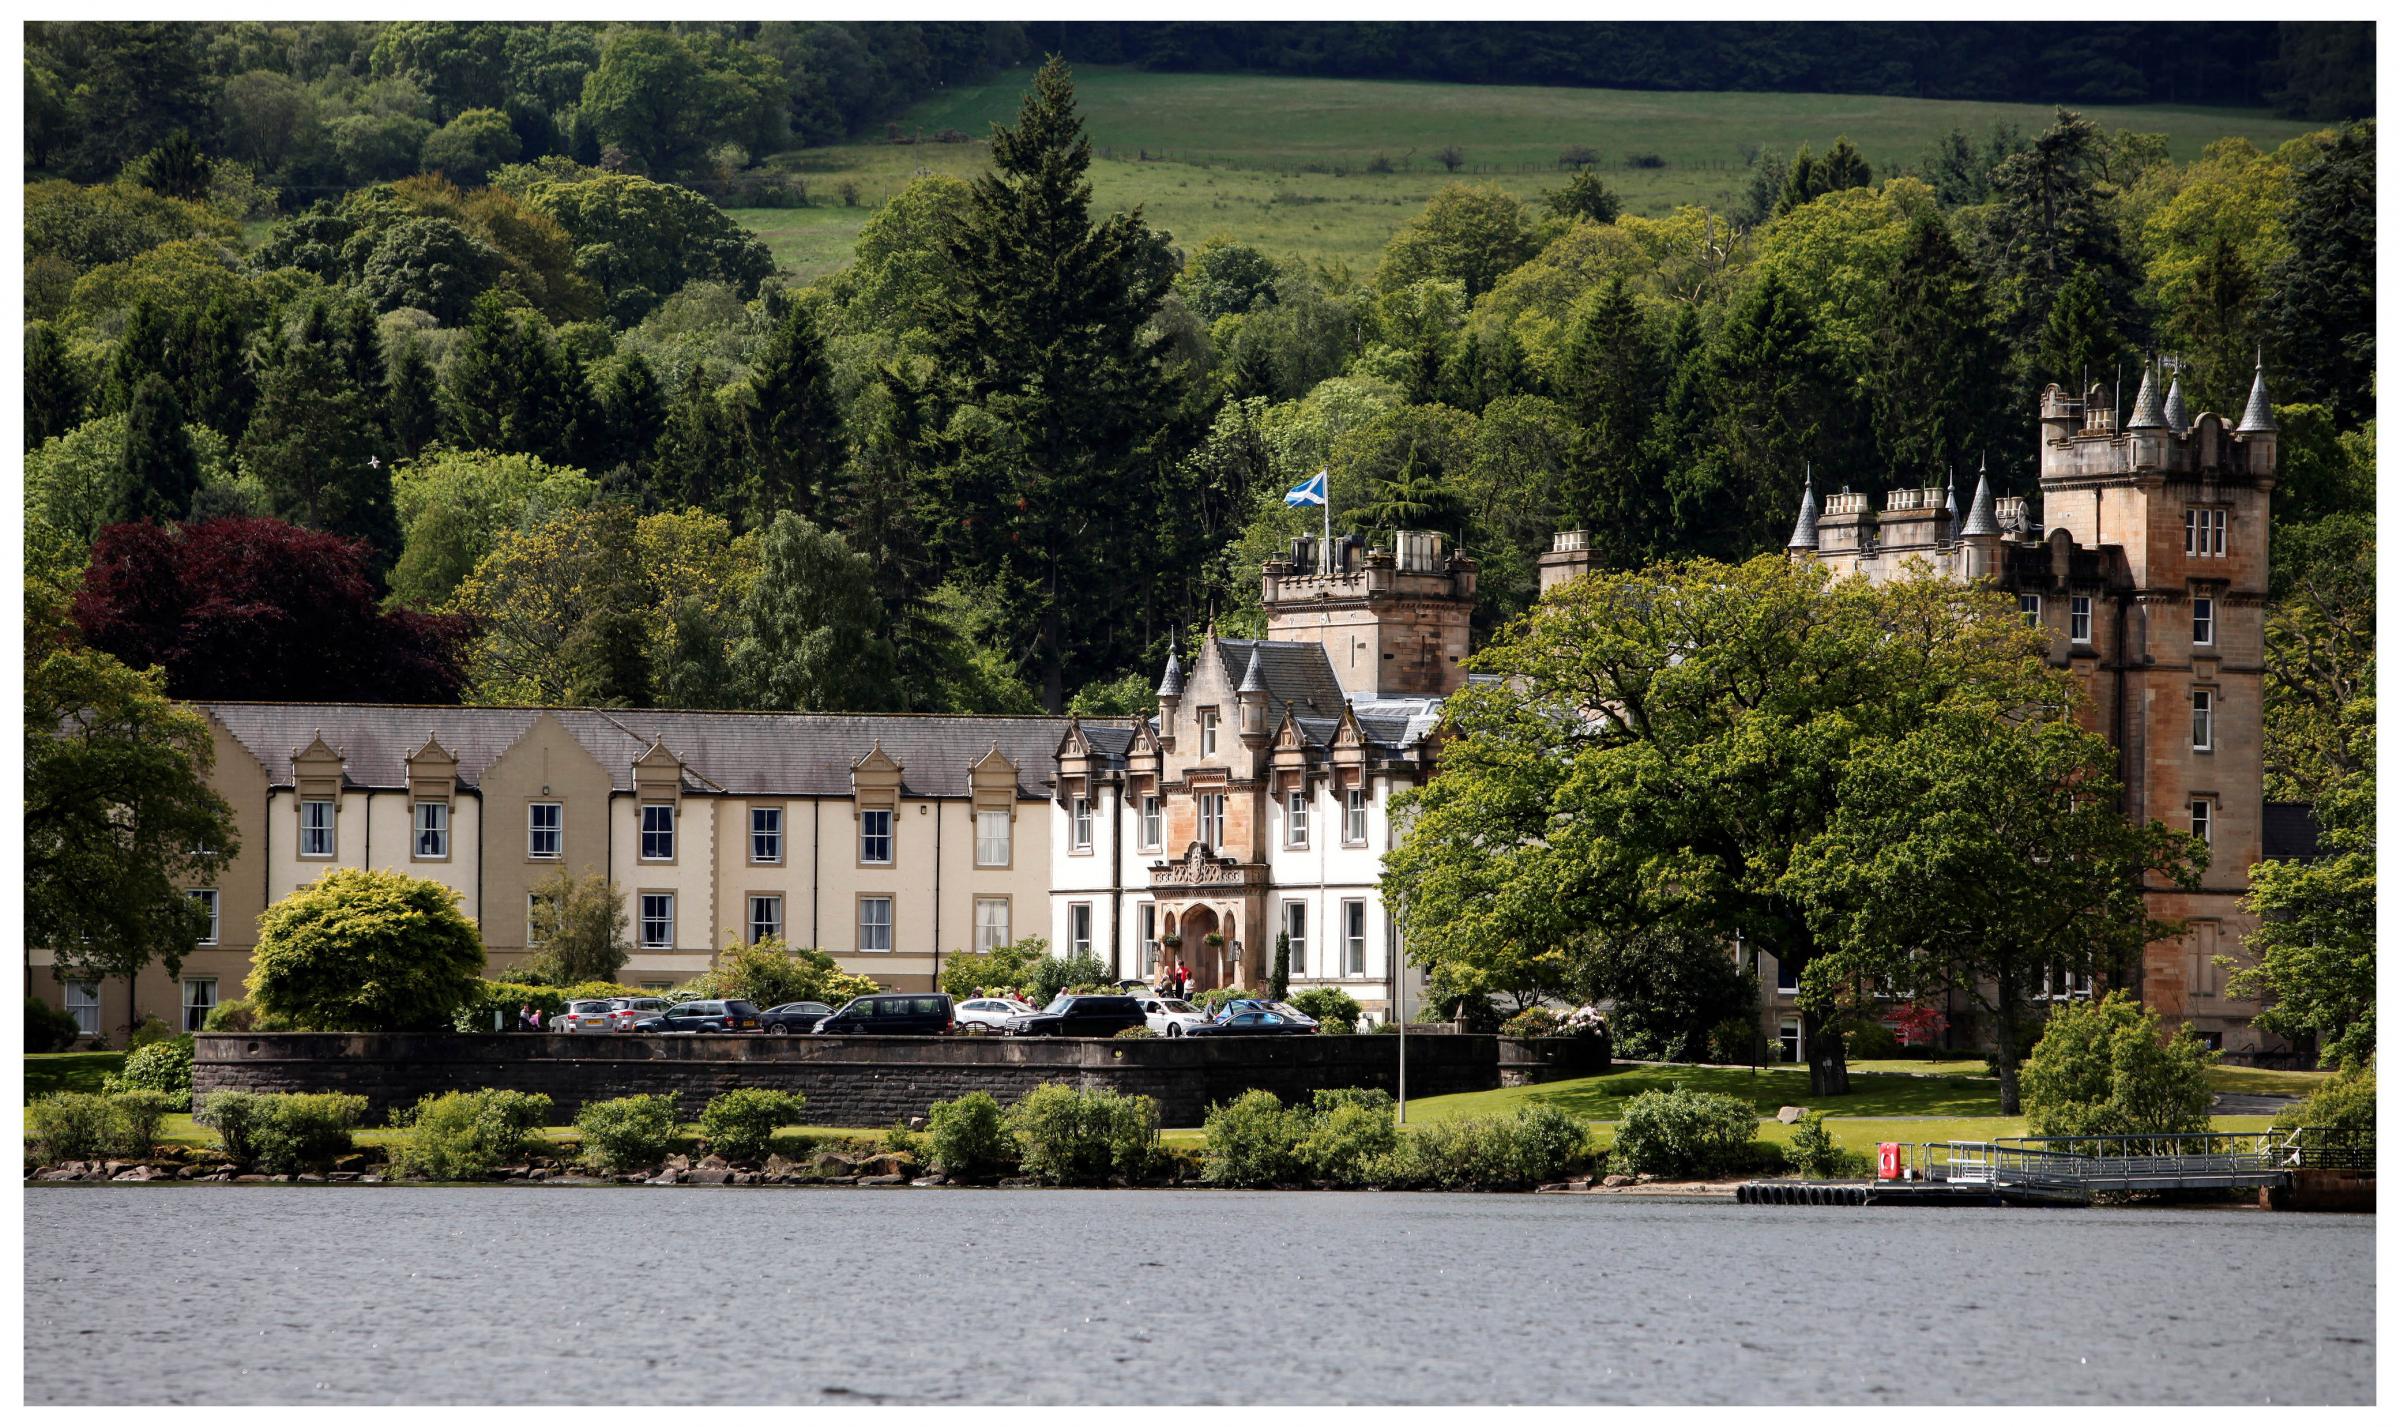 Police in bid to restrict luxury Loch Lomond hotel access as COP26 speculation grows